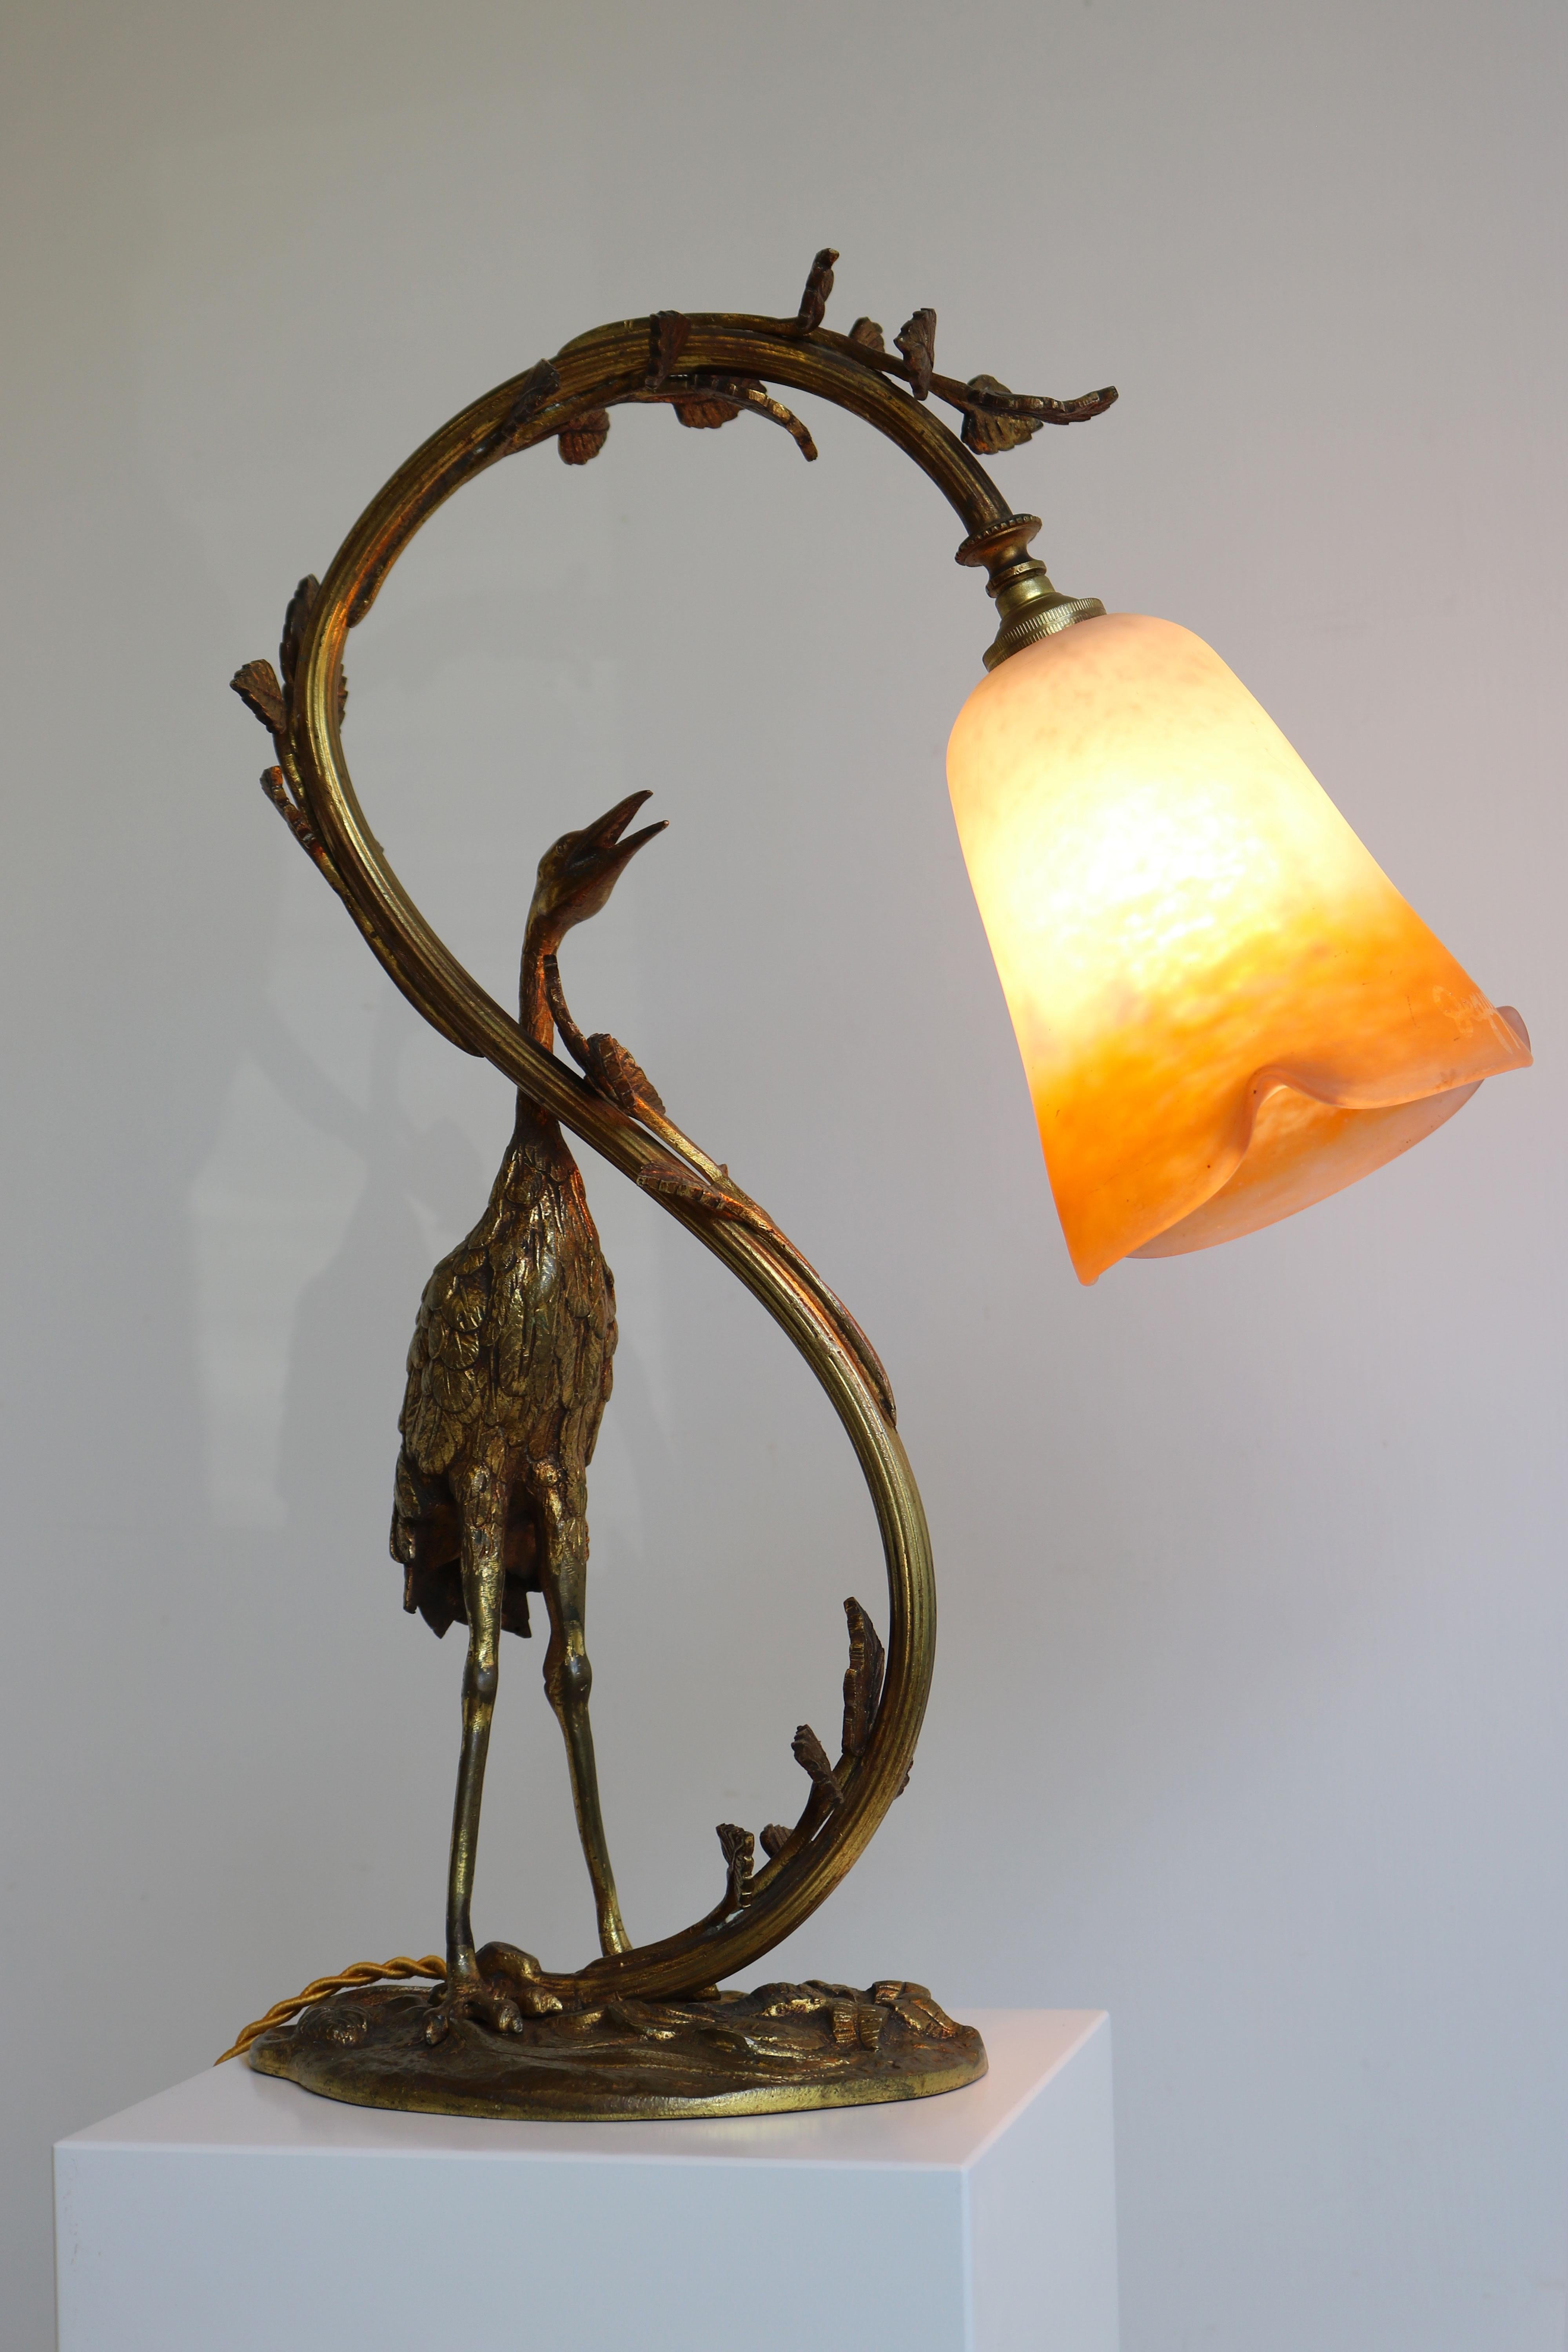 Early 20th Century Antique French Art Nouveau Table Lamp Heron by Degue 1920 Pate De Verre Bronze  For Sale